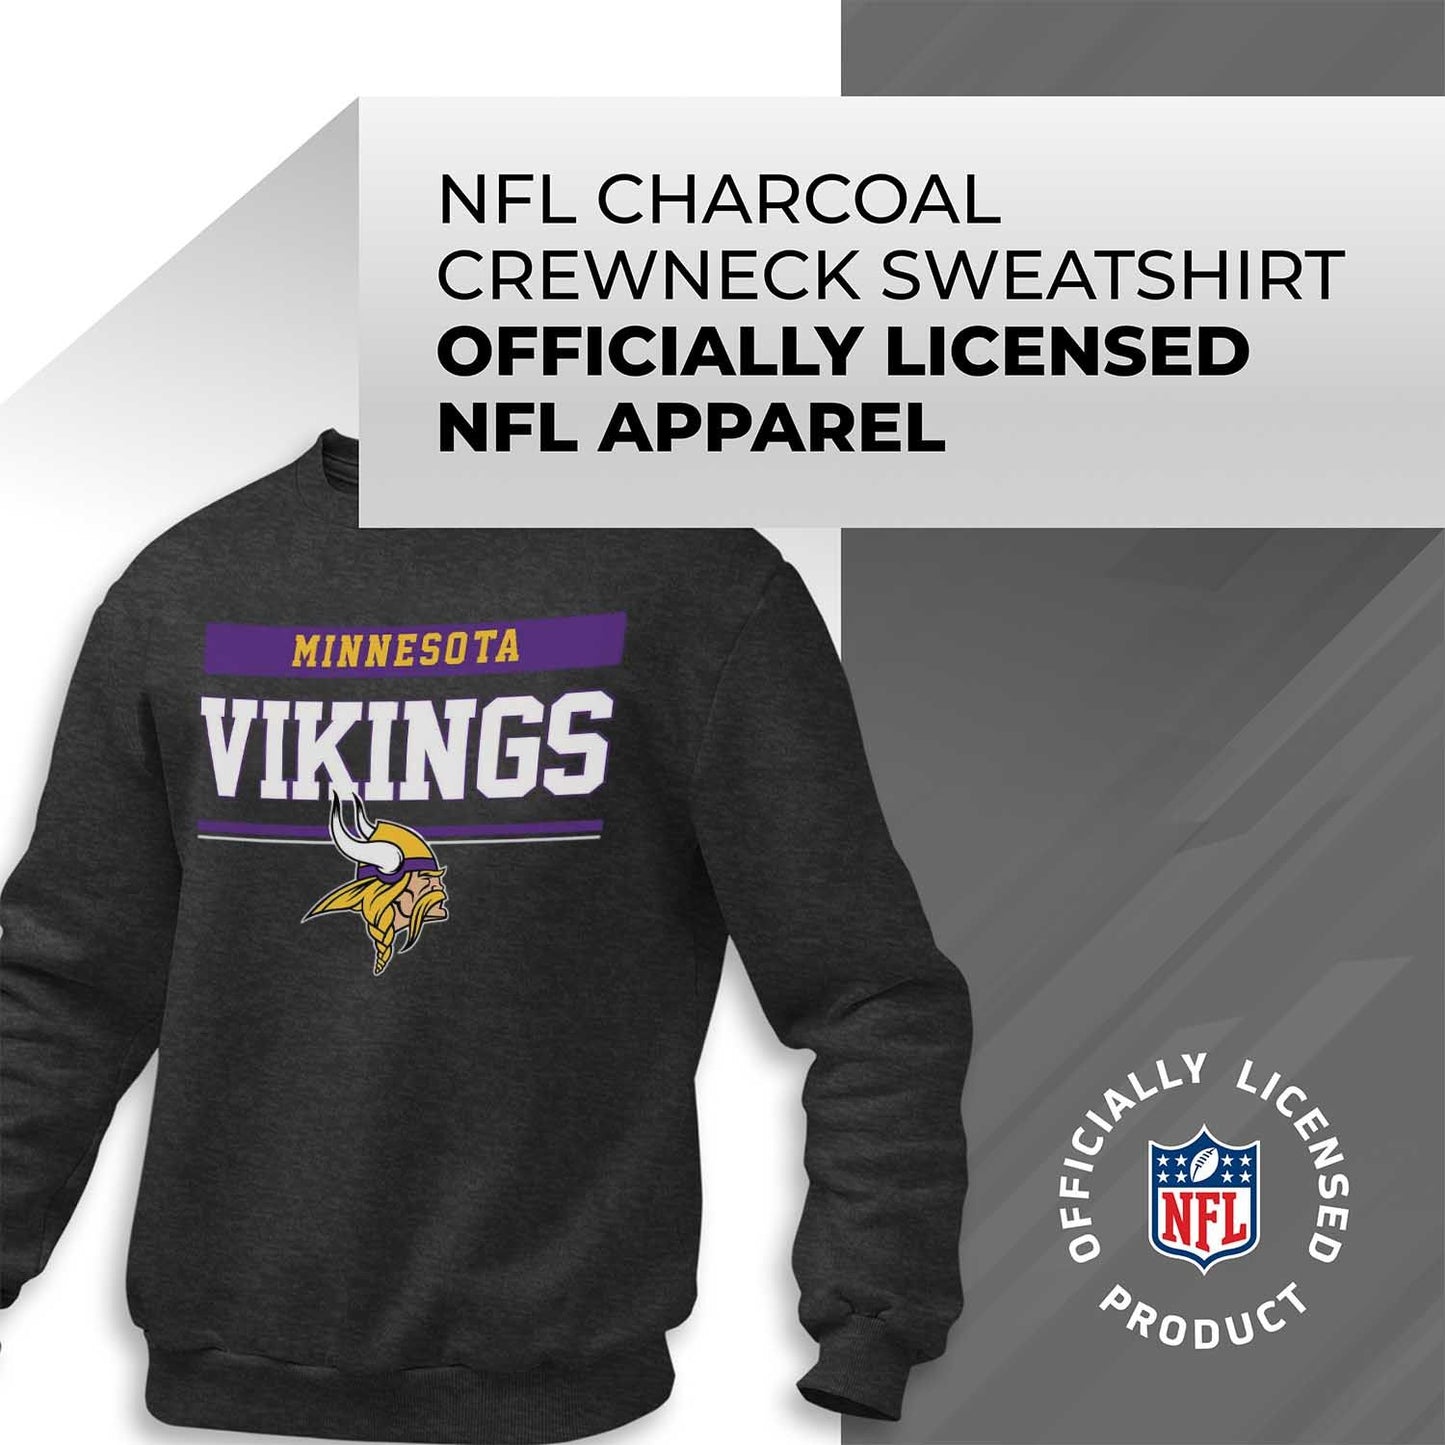 Minnesota Vikings NFL Adult Long Sleeve Team Block Charcoal Crewneck Sweatshirt - Charcoal